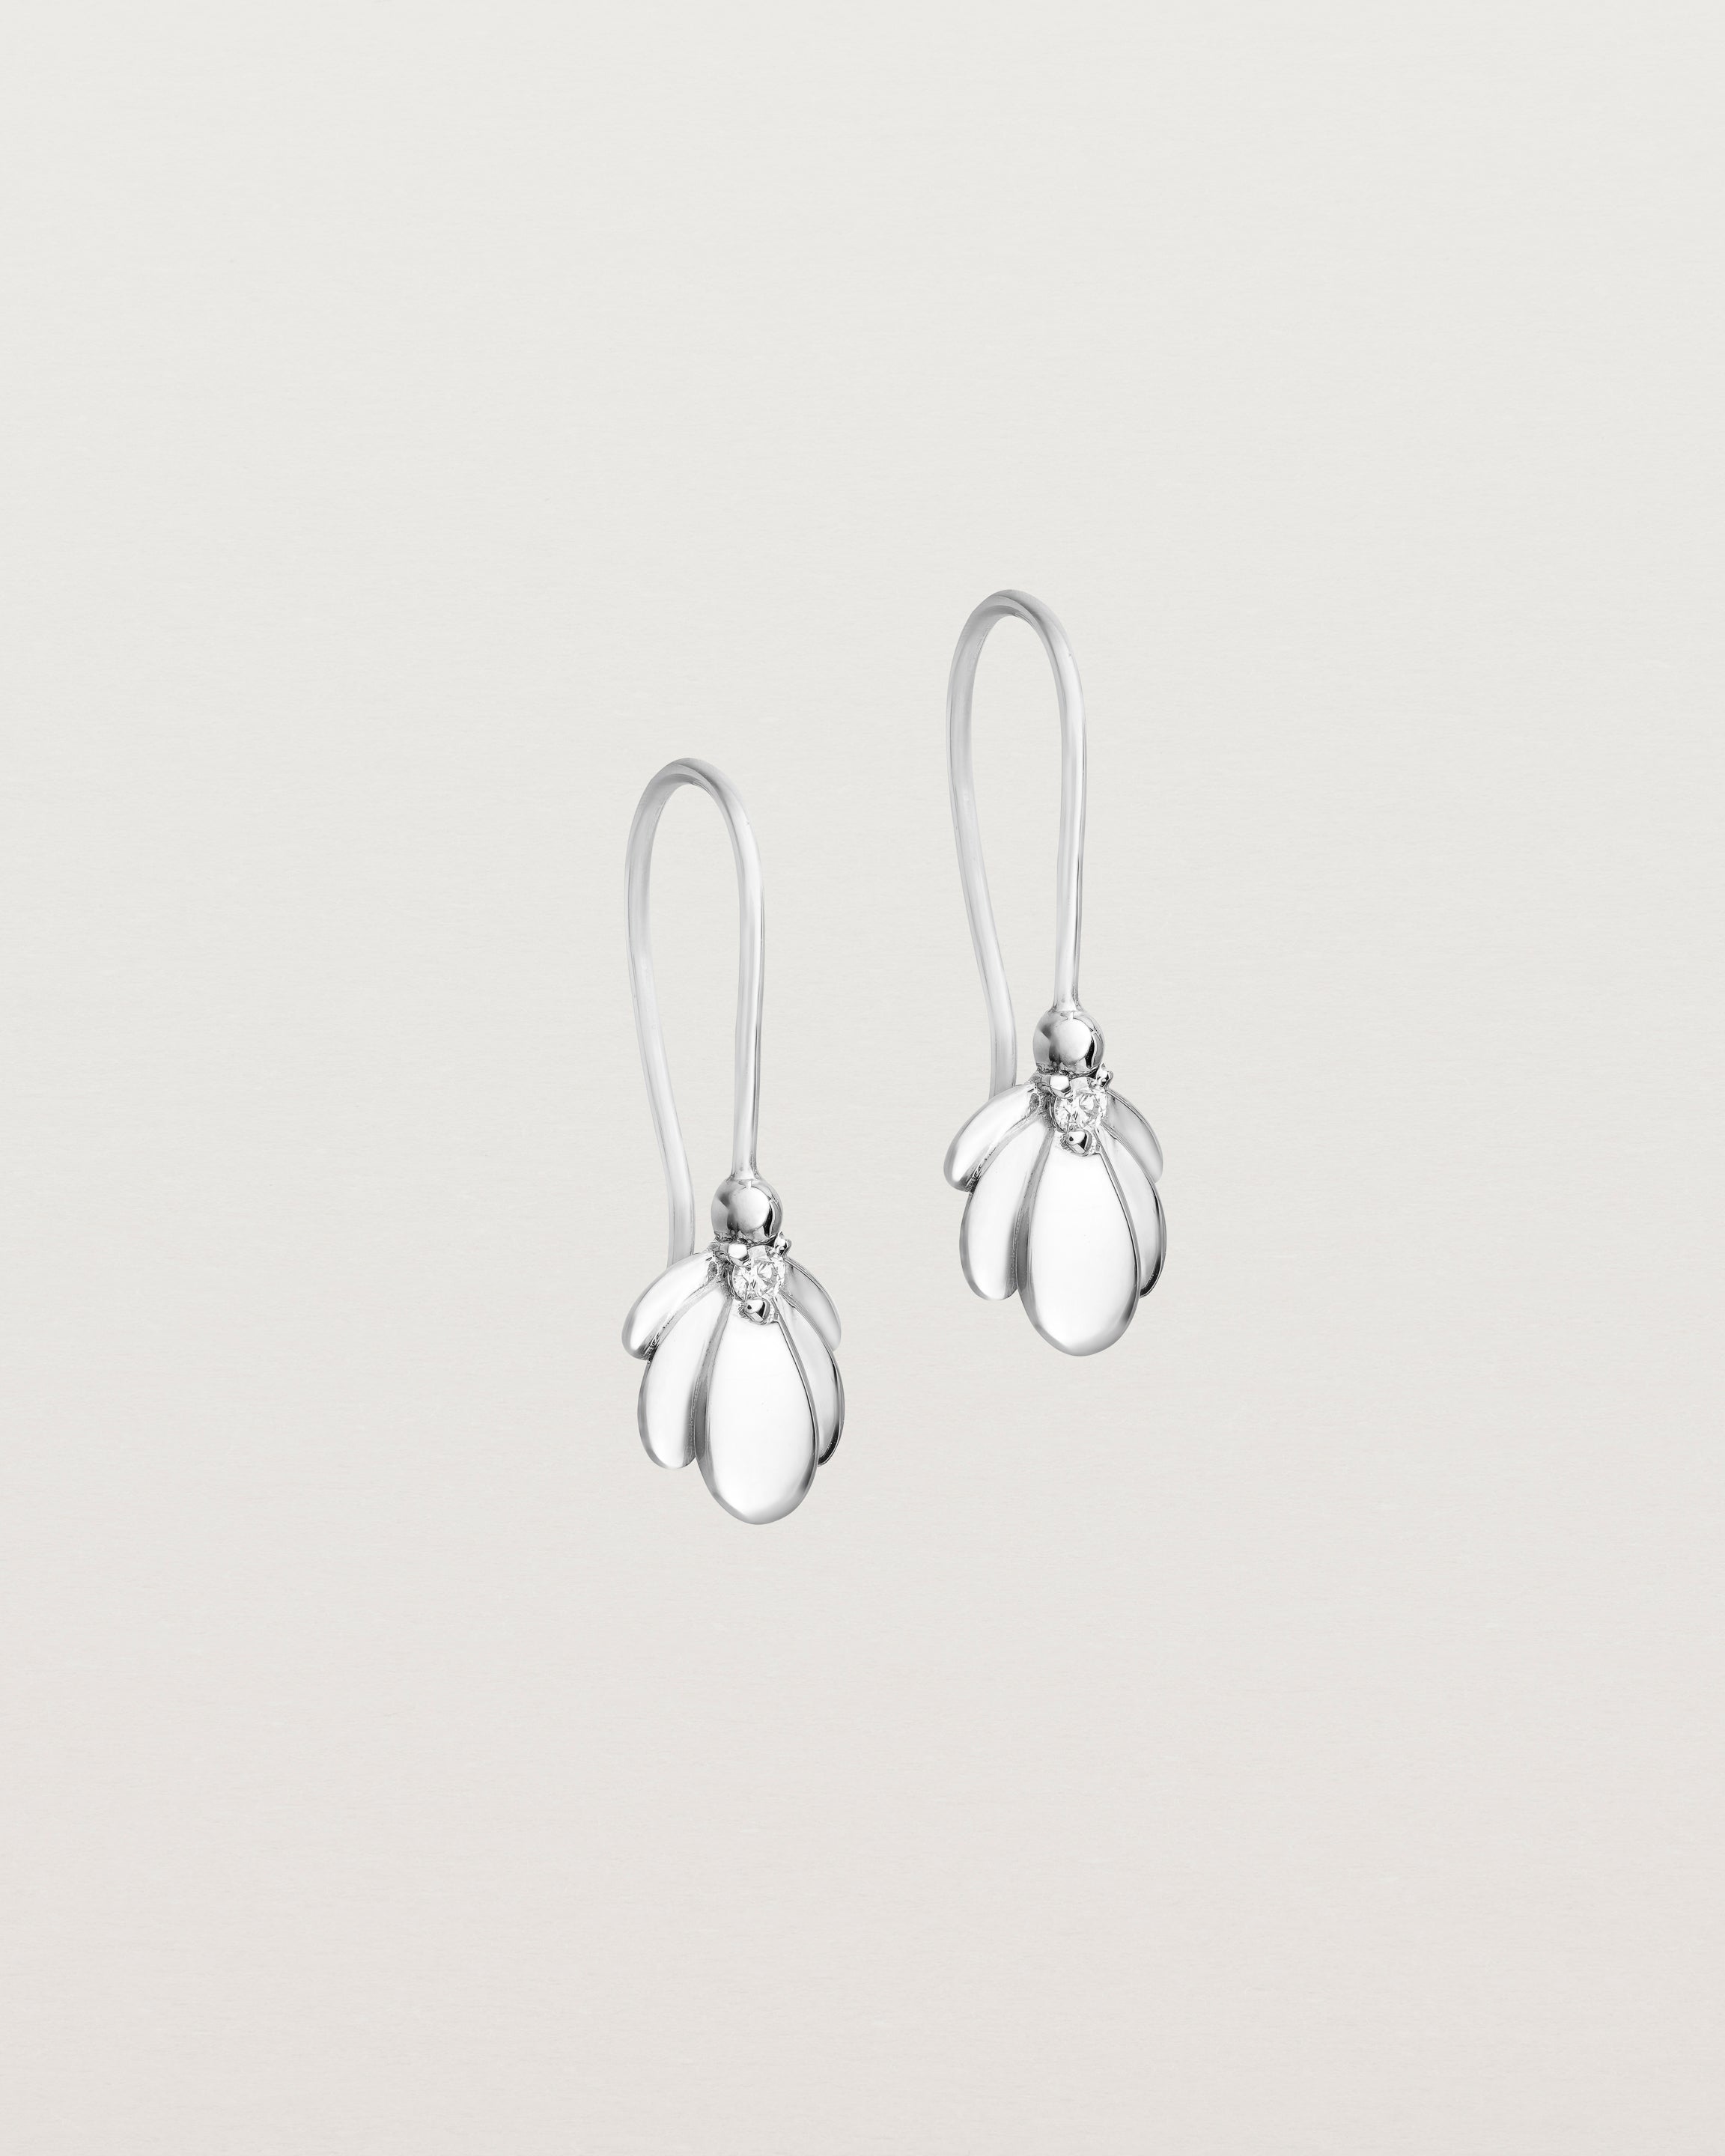 Angled view of the Aeris Earrings | Diamond | White Gold.